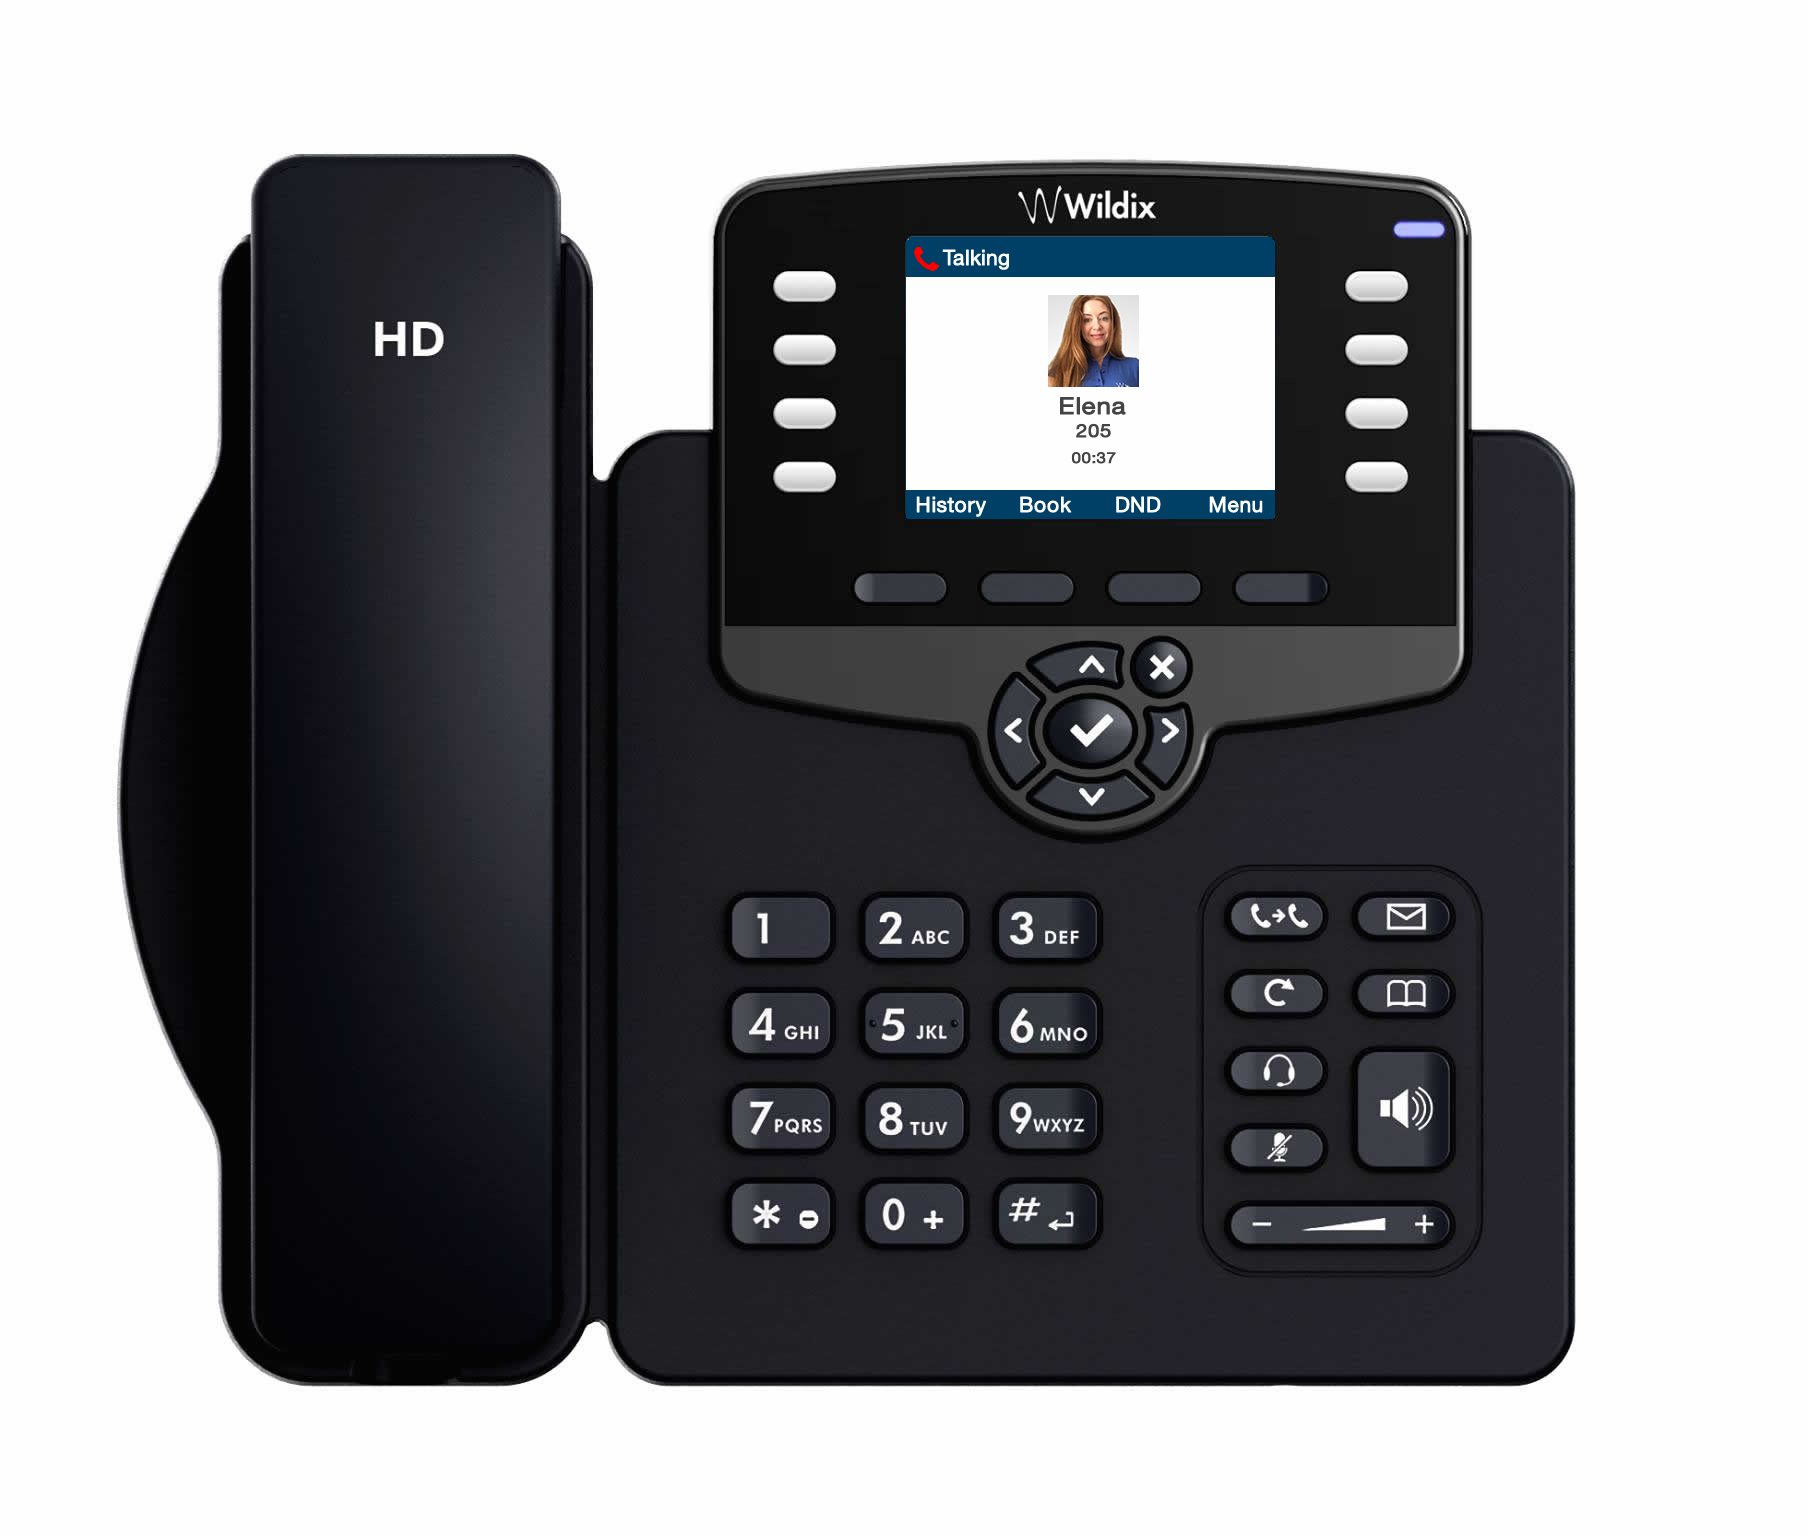 Wildix WP480G VoIP Phone